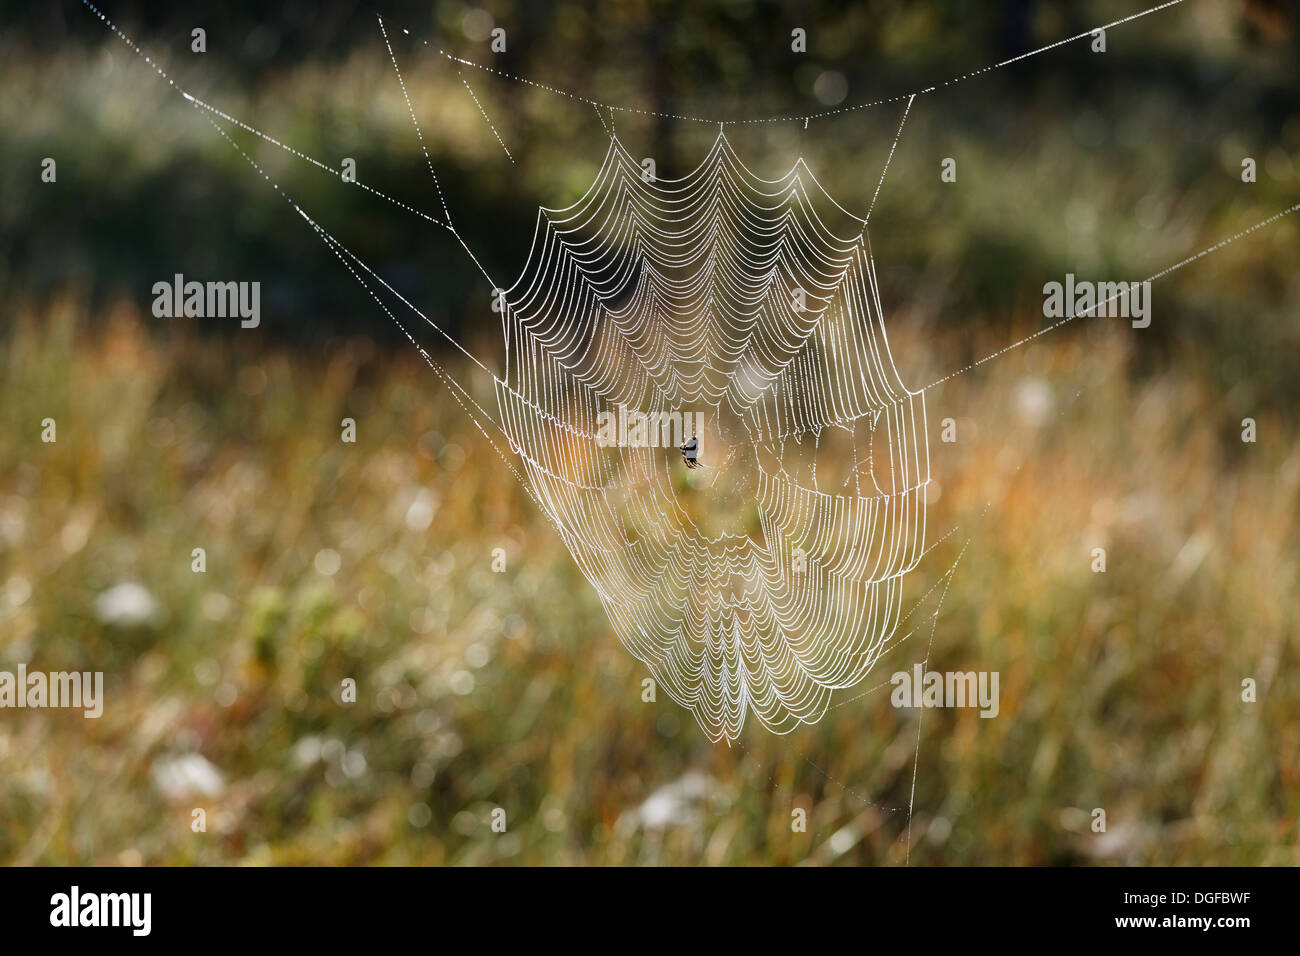 European Garden Spider or Cross Orbweaver (Araneus diadematus) in a web, Steingaden, Pfaffenwinkel region, Upper Bavaria Stock Photo